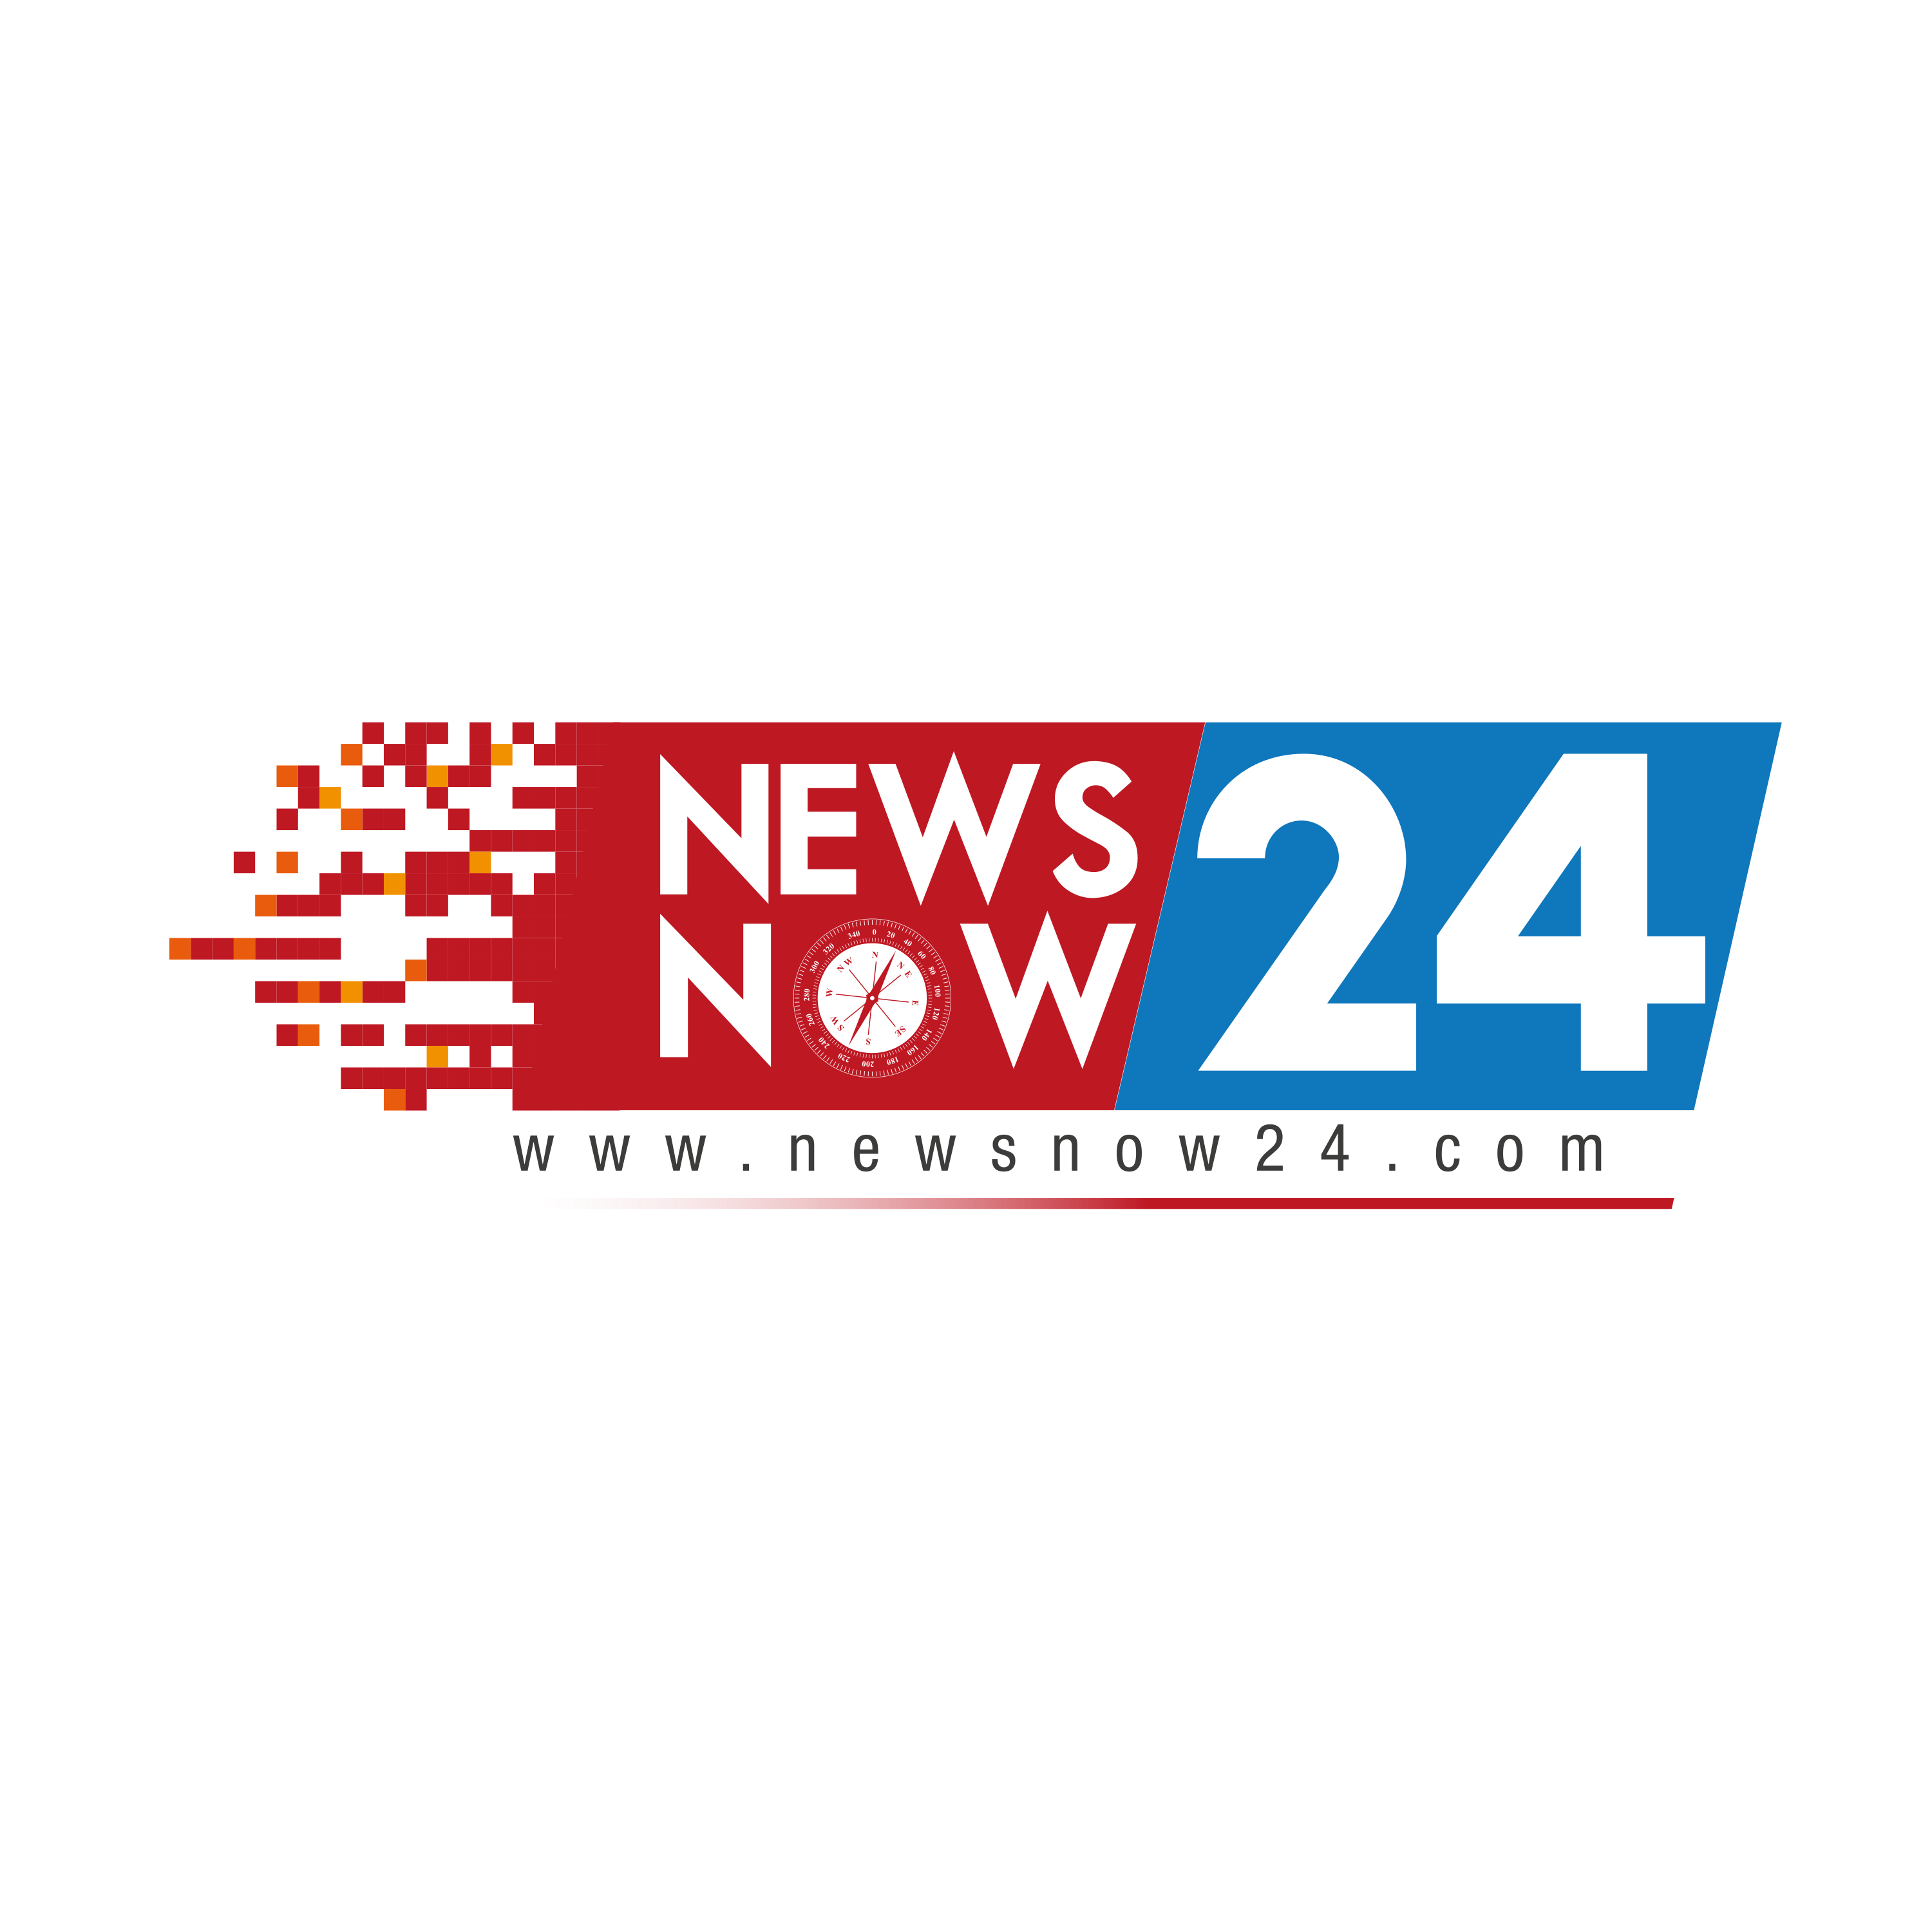 Newsnow24 Logo Transparent Image